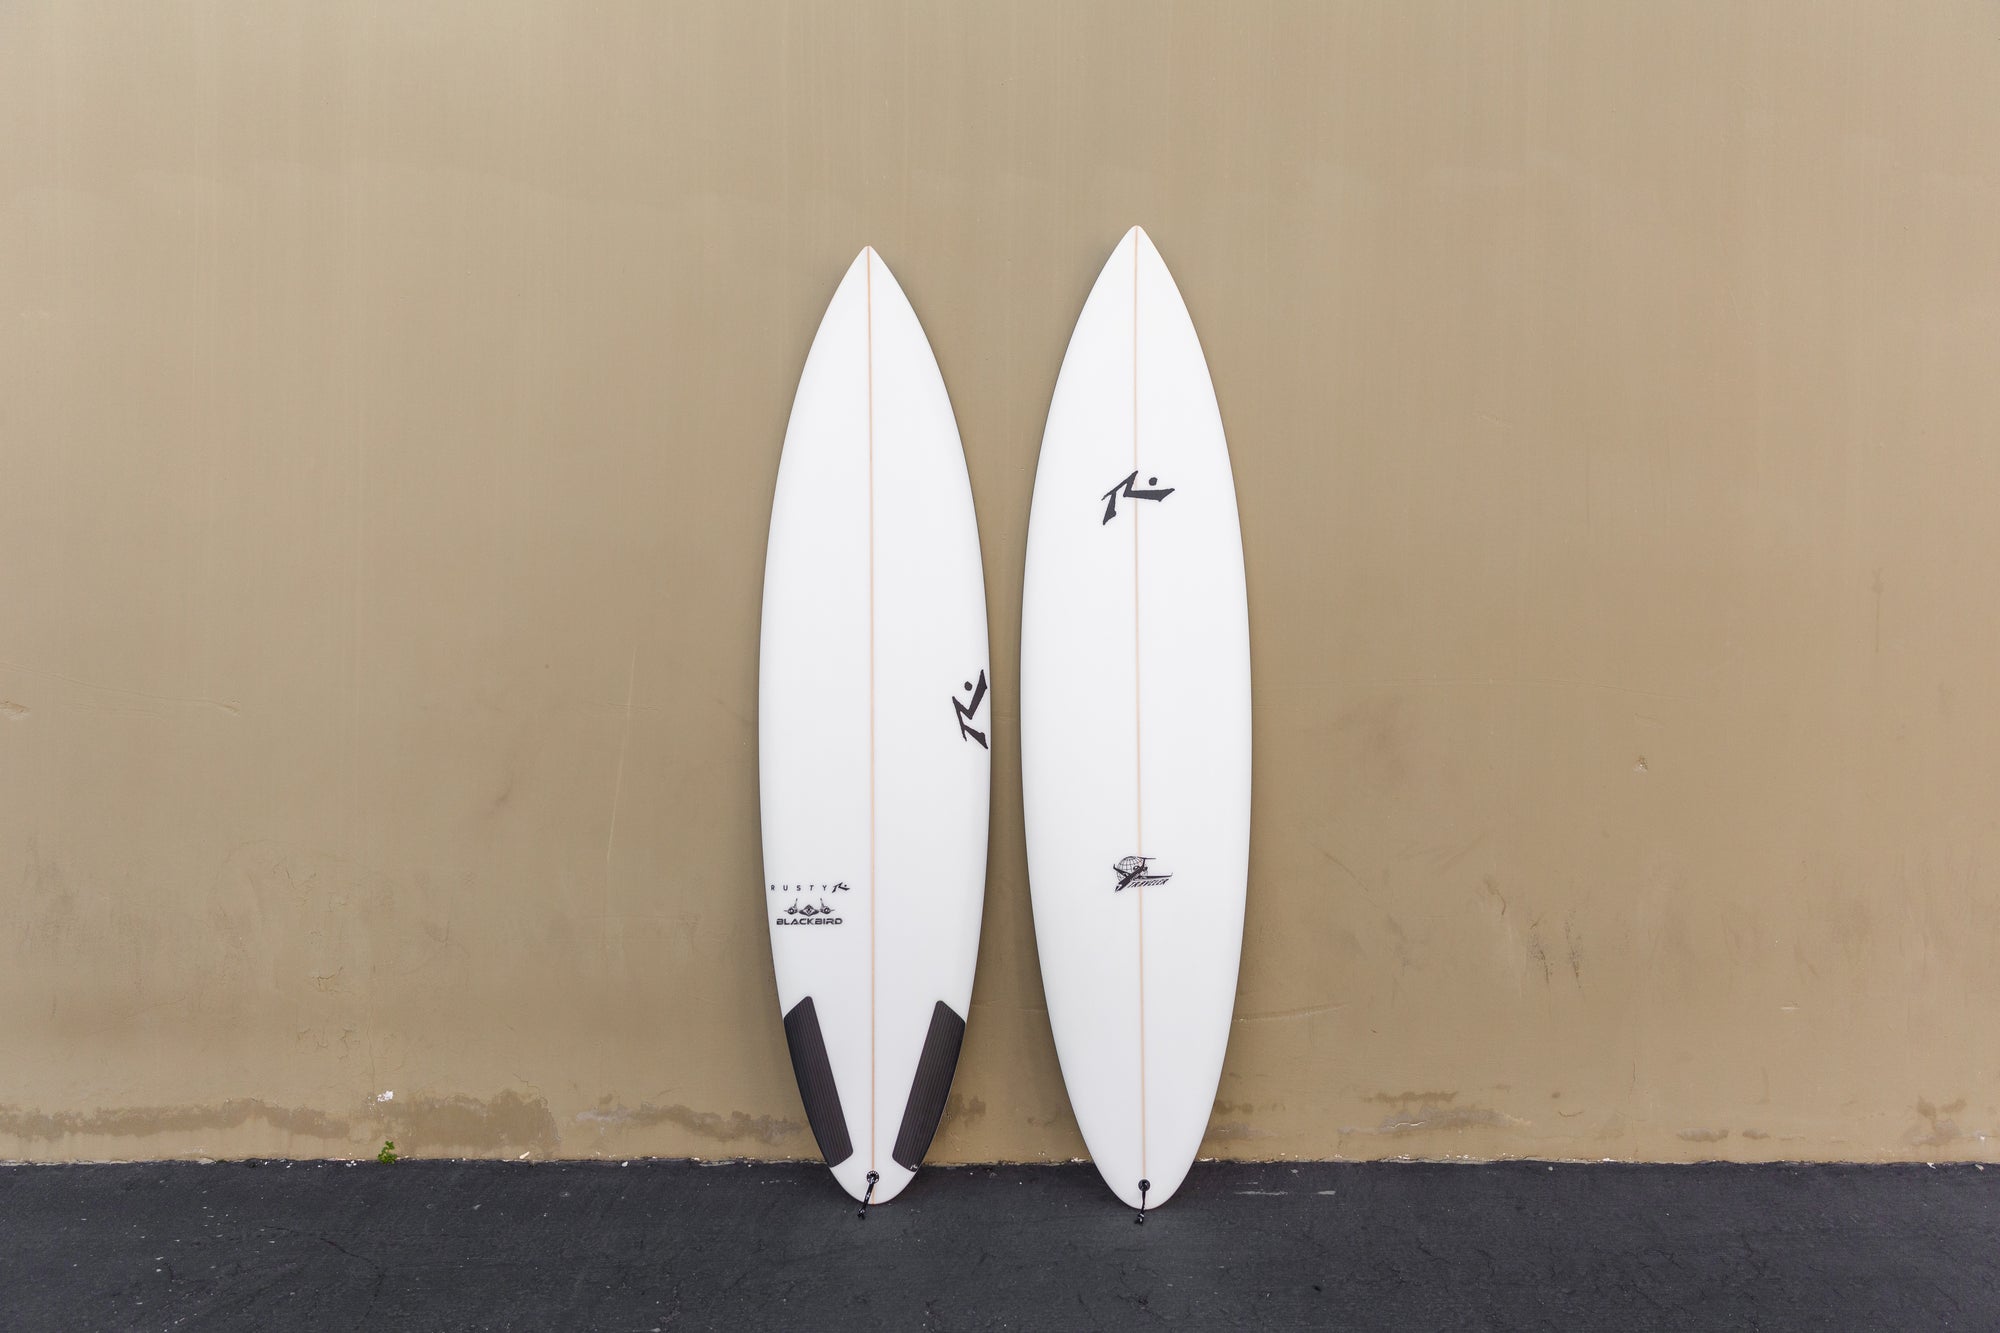 Best Step Up Surfboard: Blackbird vs New Traveler